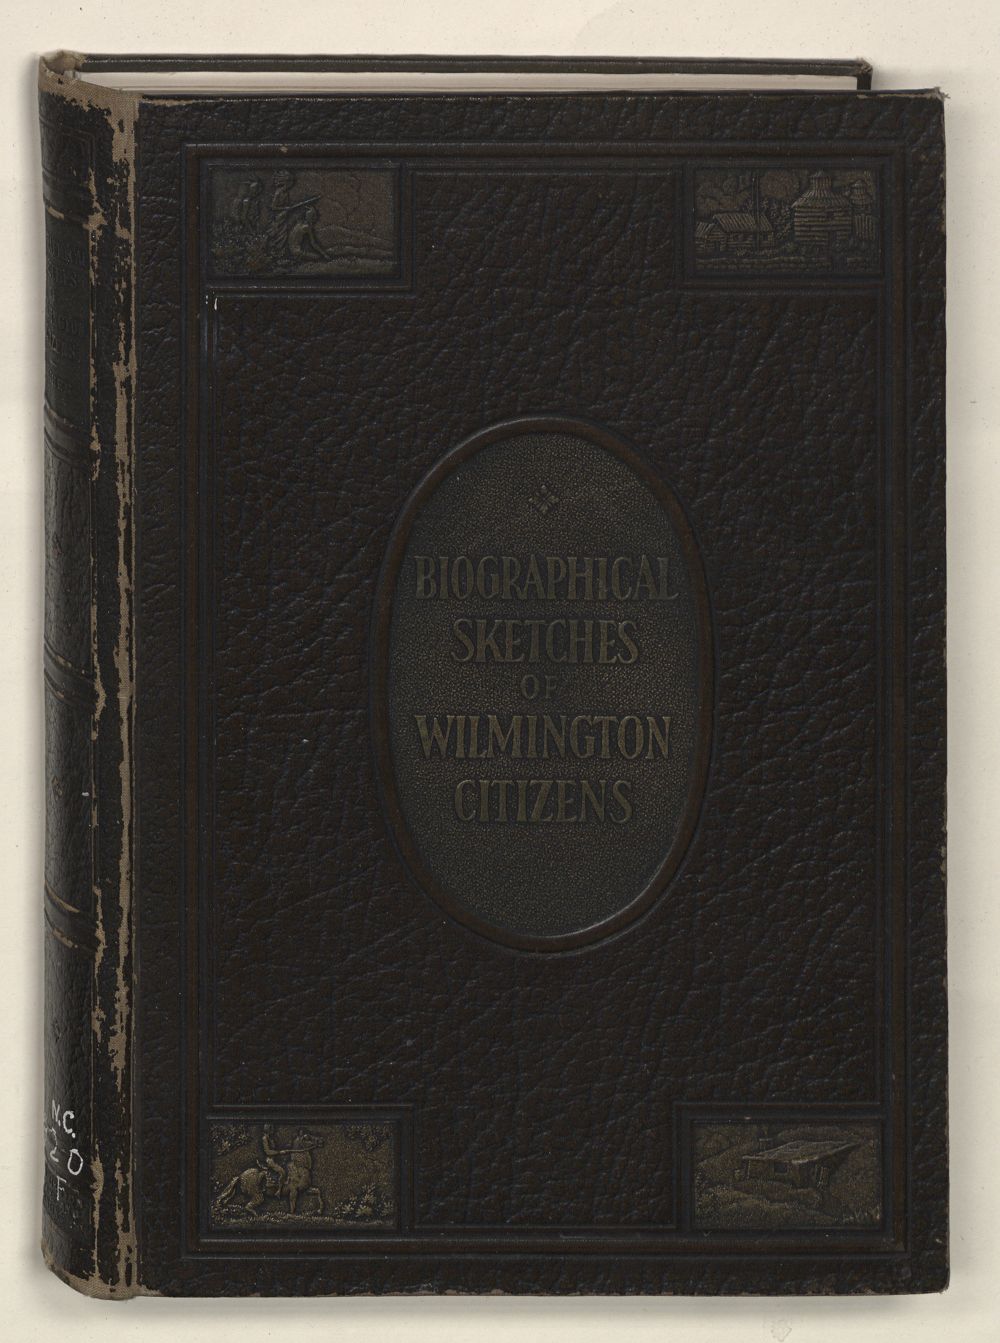 Biographical sketches of Wilmington citizens - ECU Digital